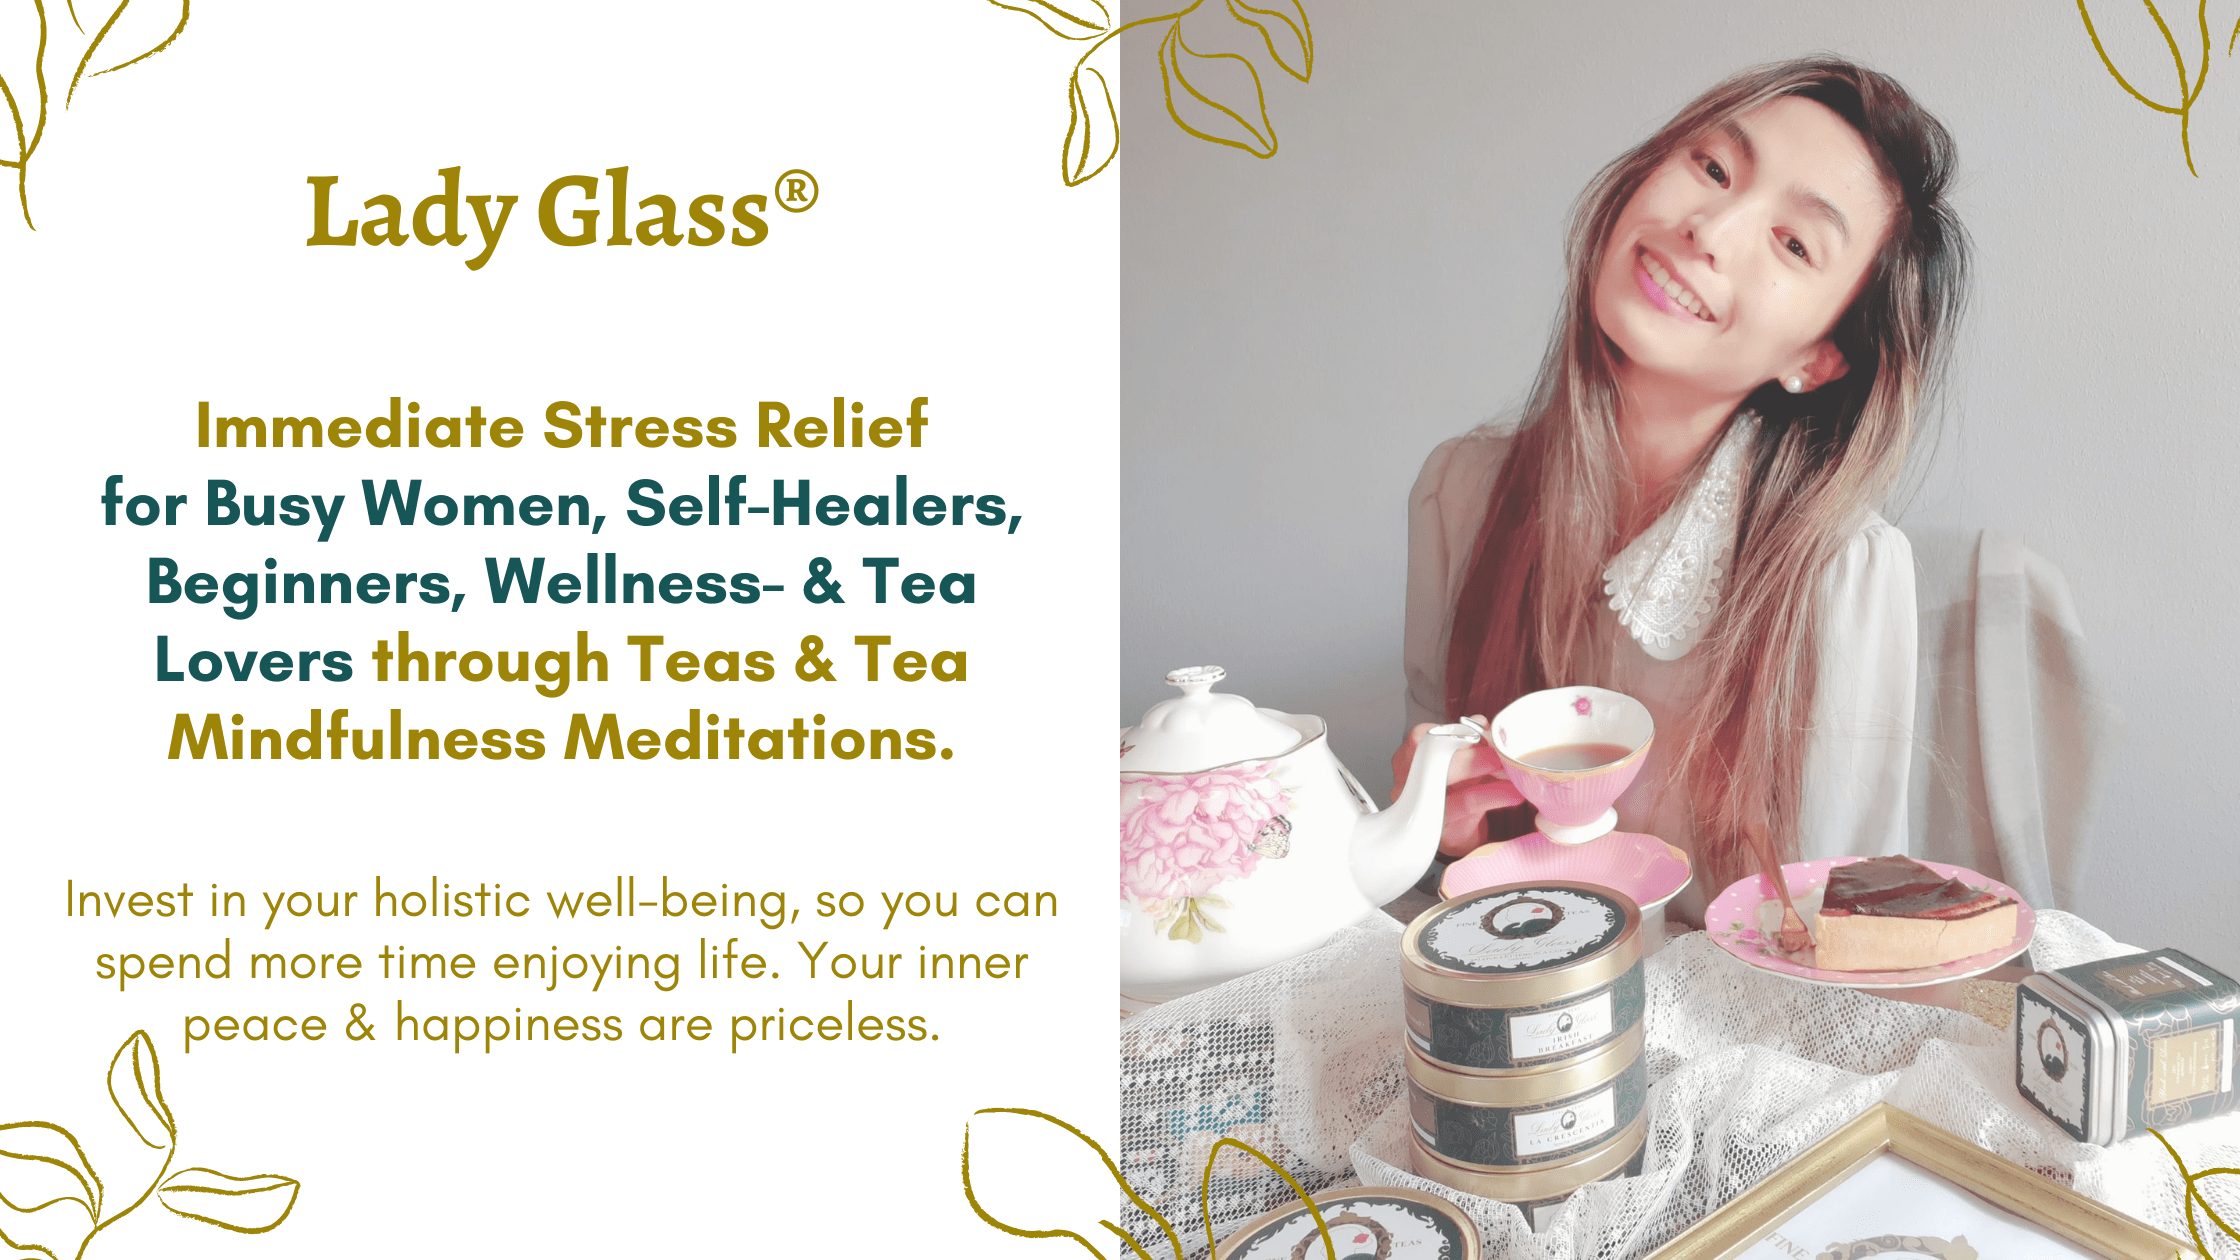 Stress relief and holistic health through tea meditation & mindfulness meditations